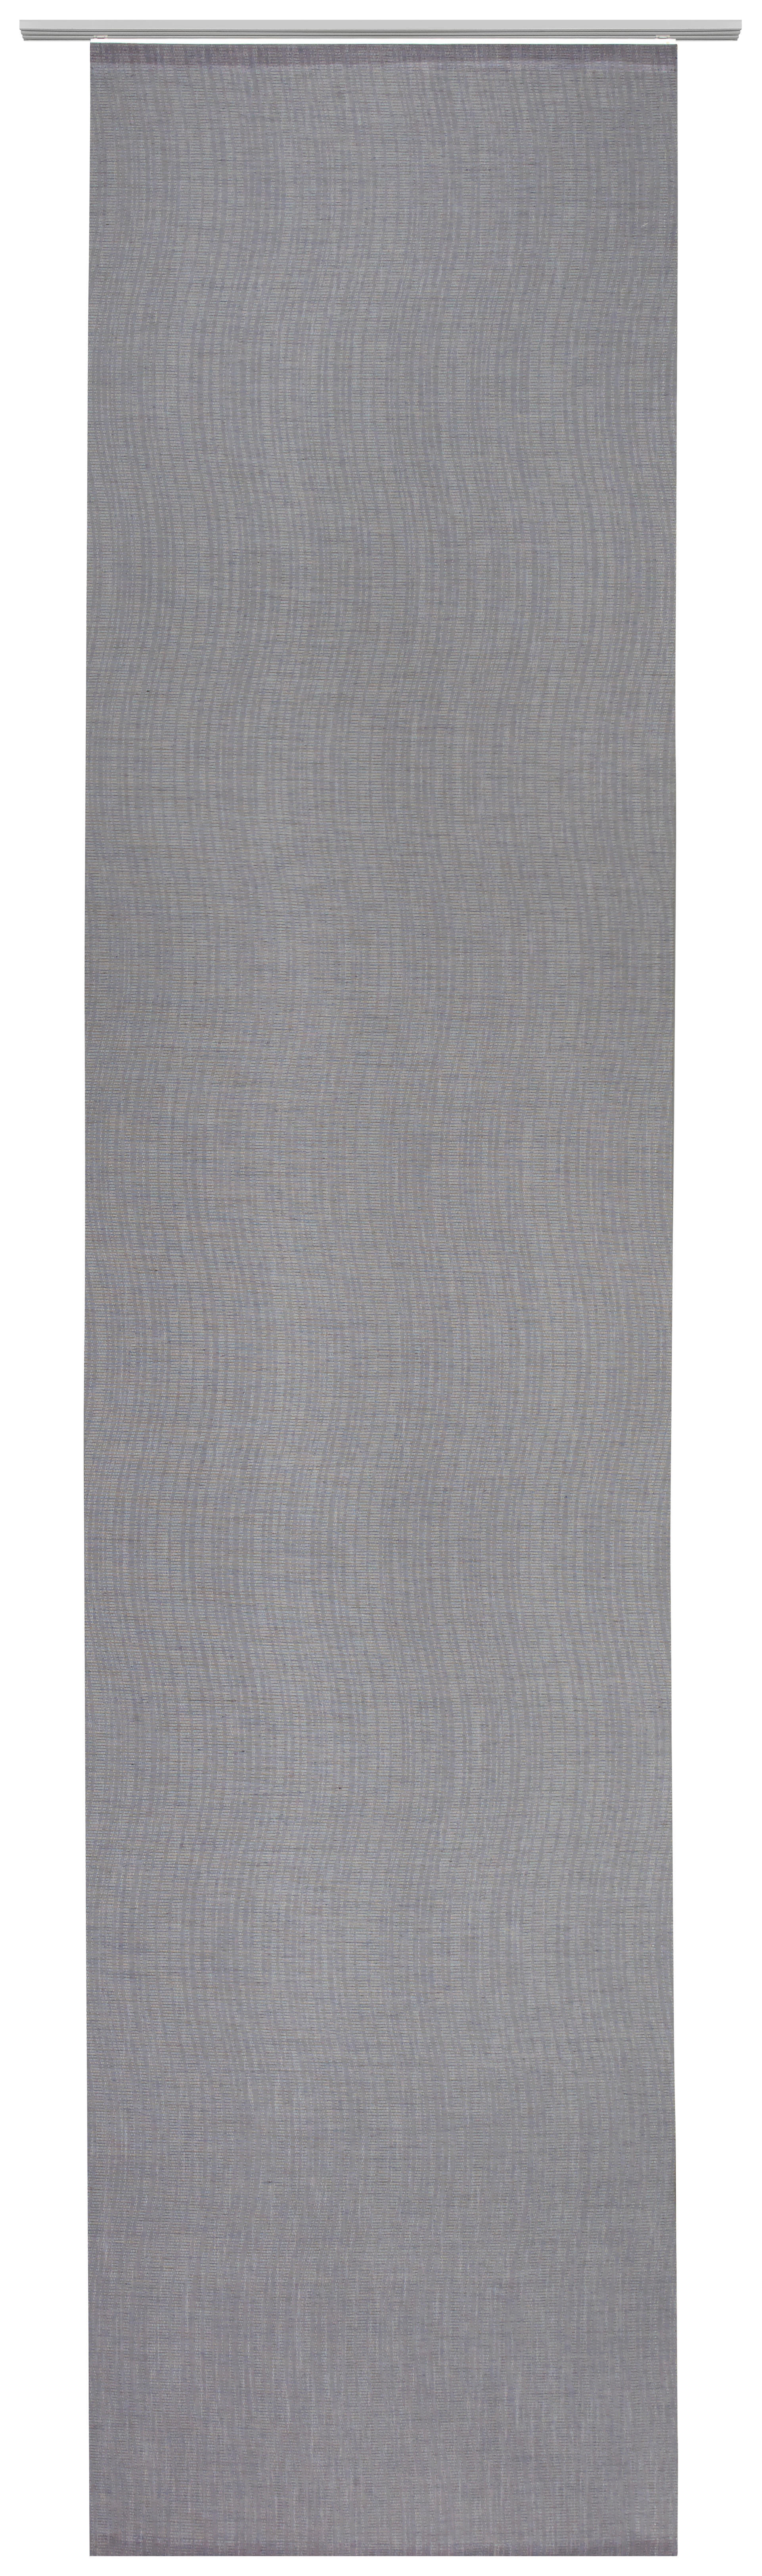 FLÄCHENVORHANG in Grau  - Grau, Design, Textil (60/255cm) - Novel